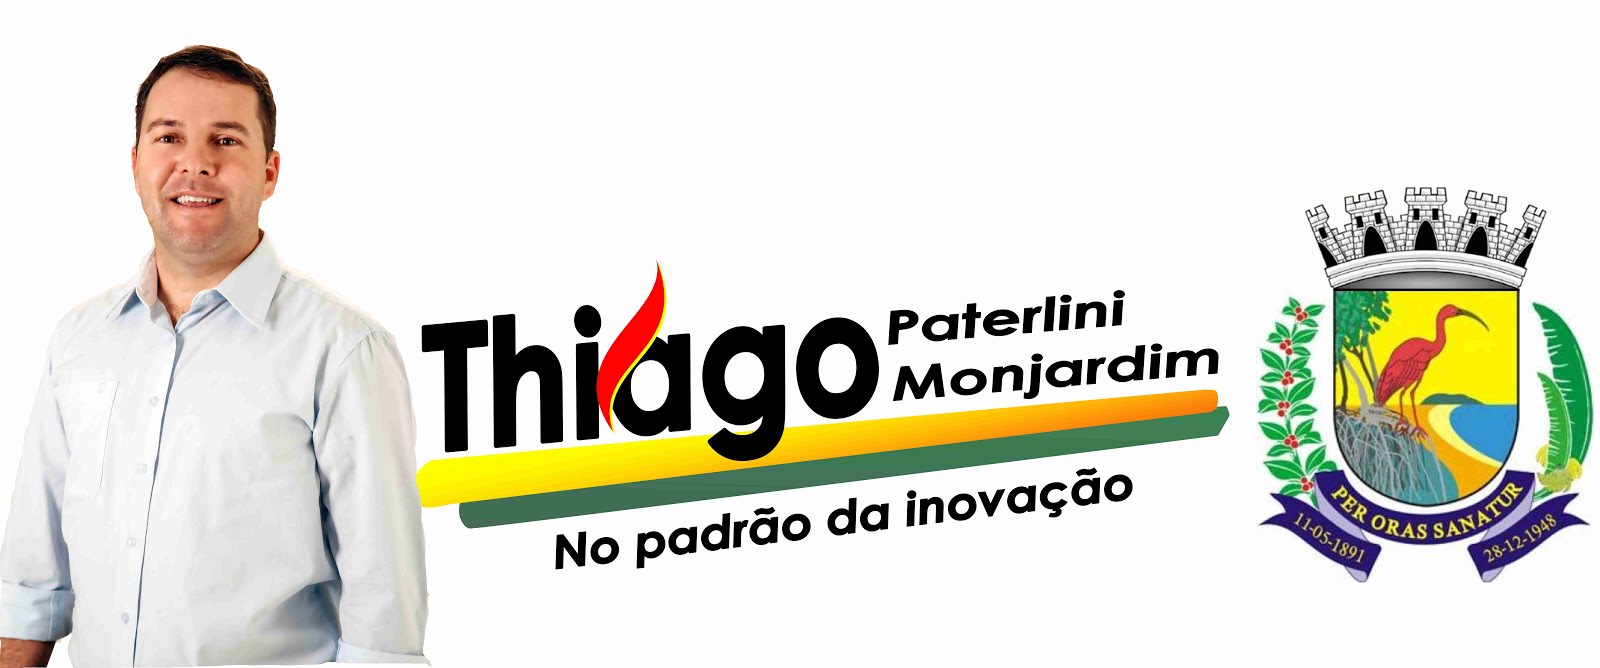 Vereador Thiago Paterlini Monjardim